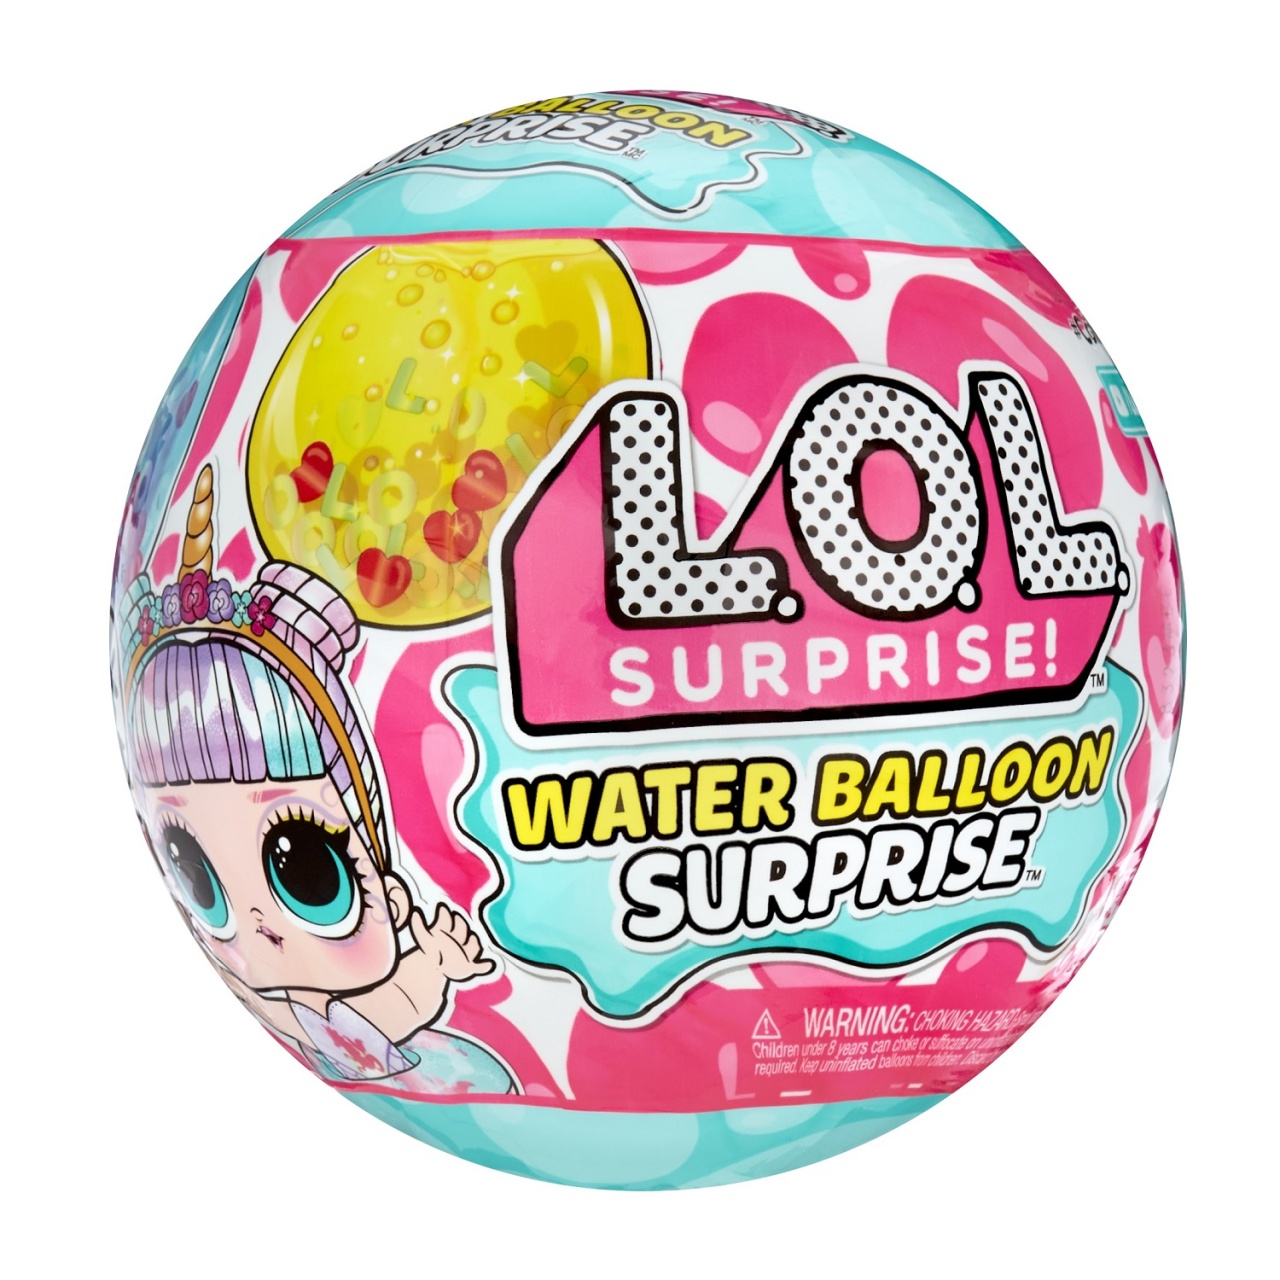 ЛОЛ СЮРПРАЙЗ Кукла в шаре Water Balloon с акс. L.O.L. SURPRISE!,  42688